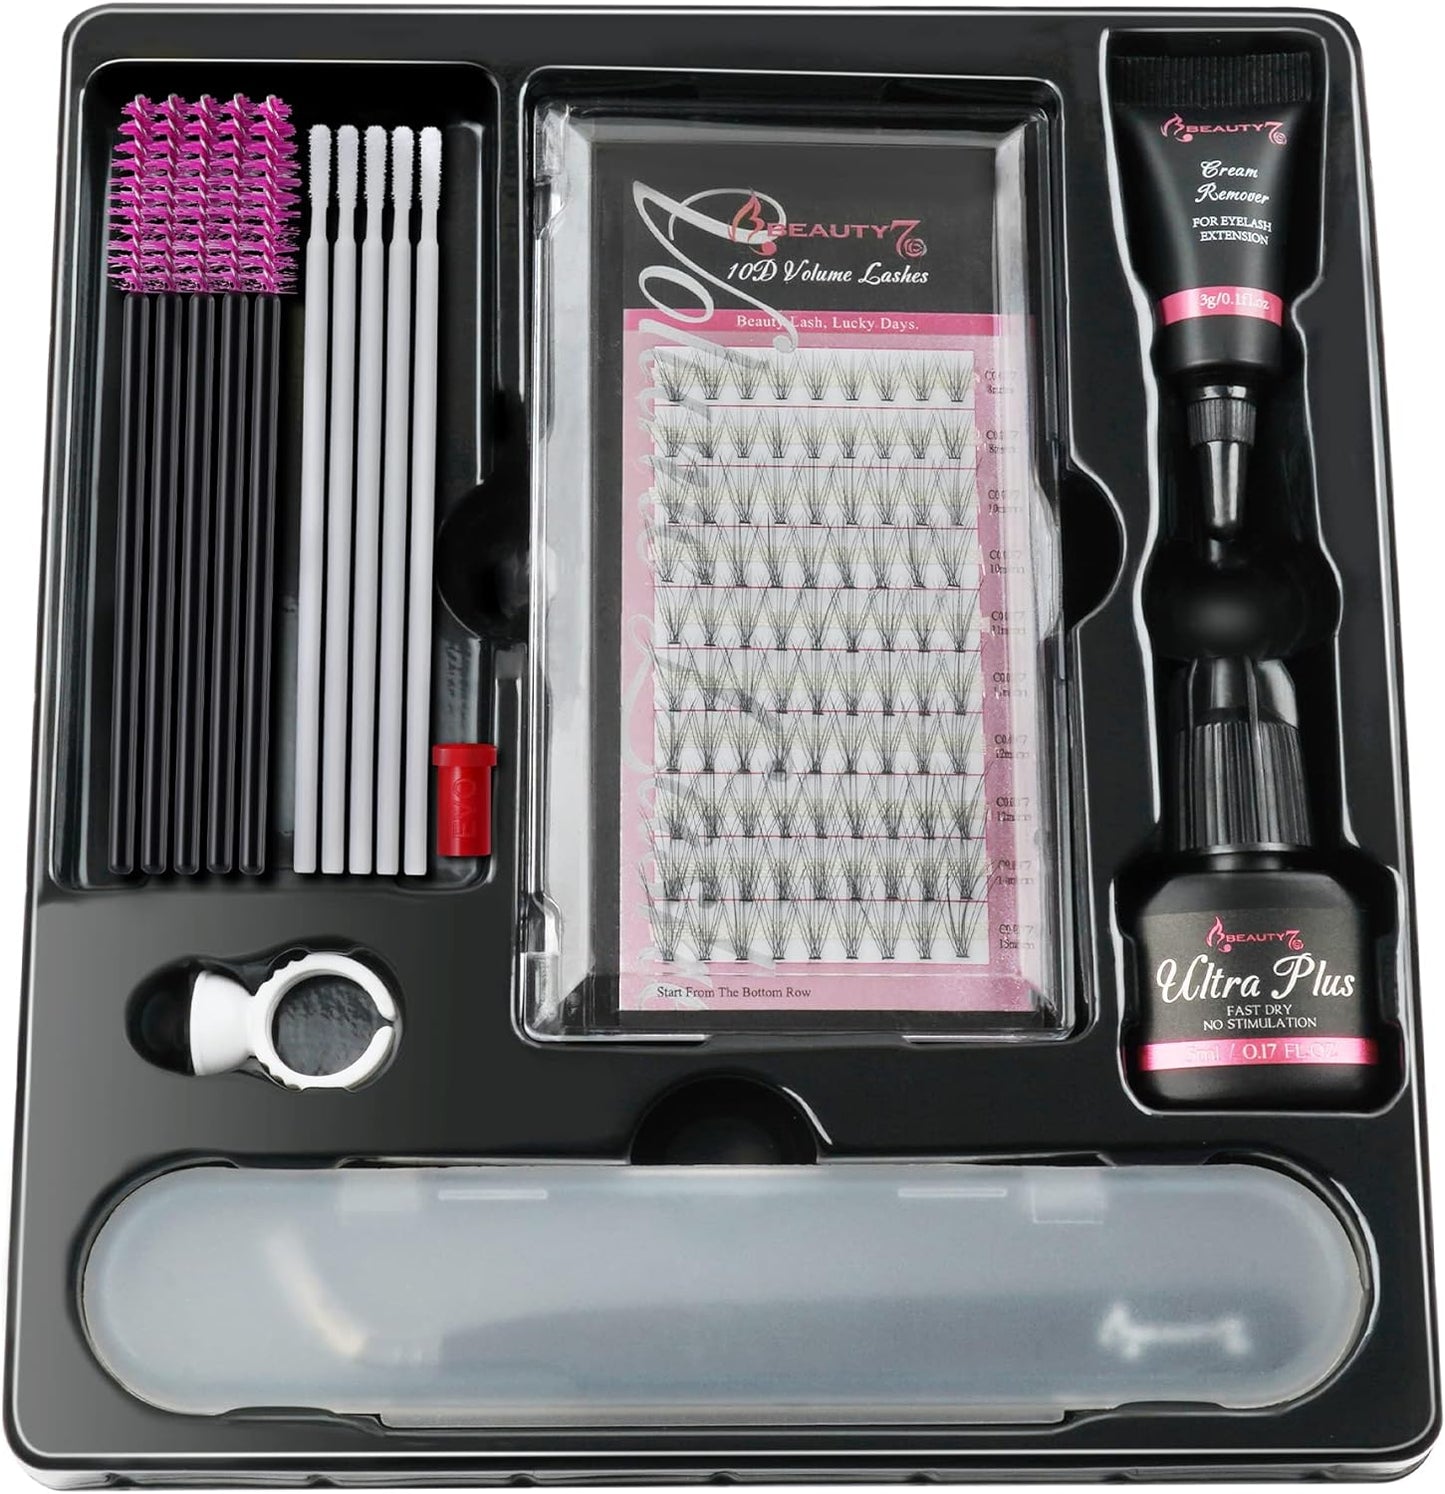 Beauty7 DIY Eyelash Extension Kit Lash Kit for Self Application Eyelash Glue Cream Remover Cluster Lashes Tweezer at Home Lash Extensions for Individuals (10D KIT)